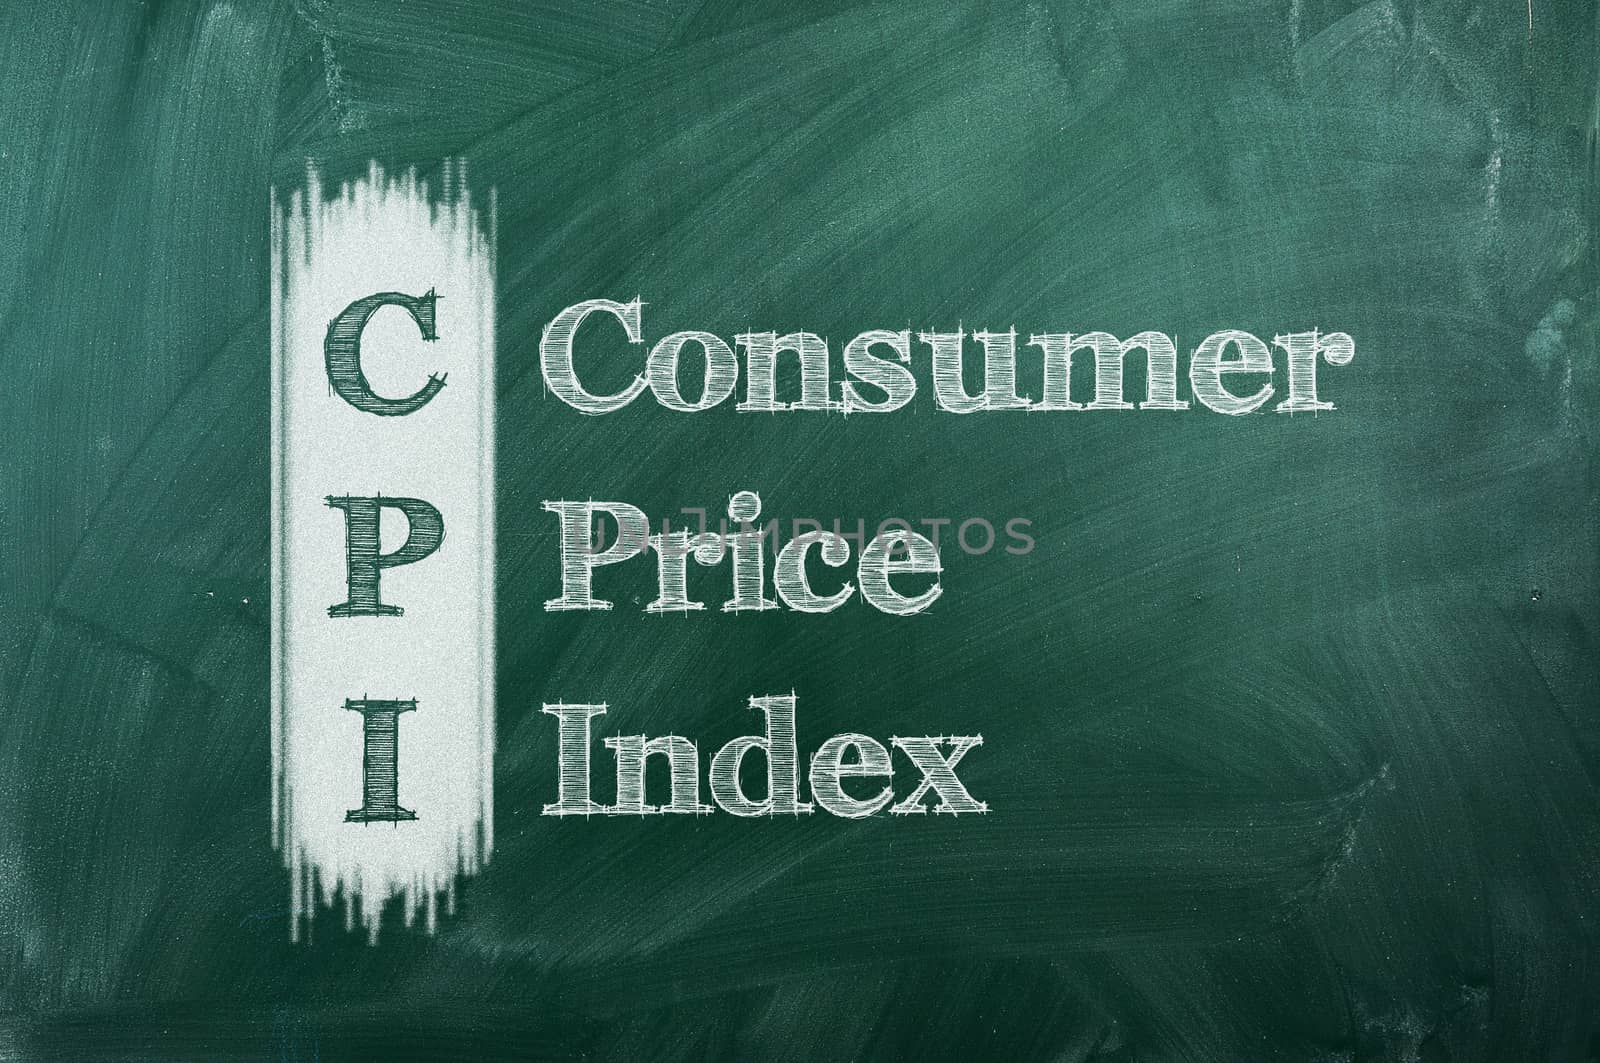 CPI Consumer Price Index on green chalkboard